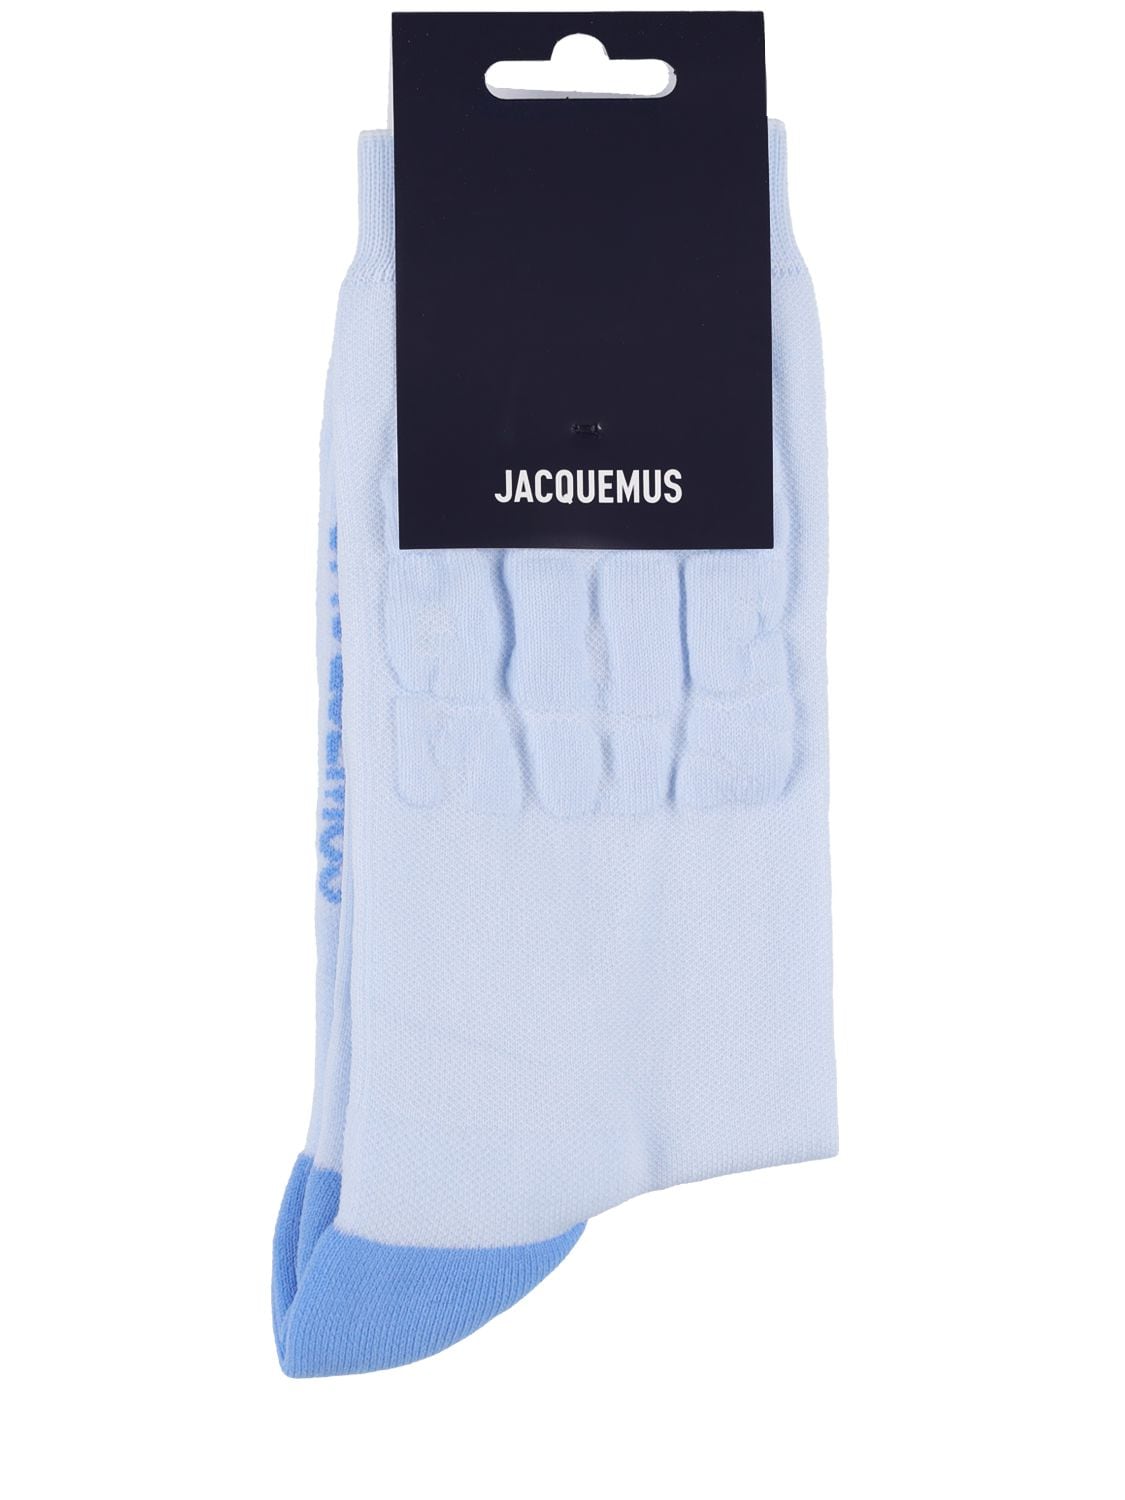 Jacquemus Les Chaussettes Banho Socks In Multi-blue